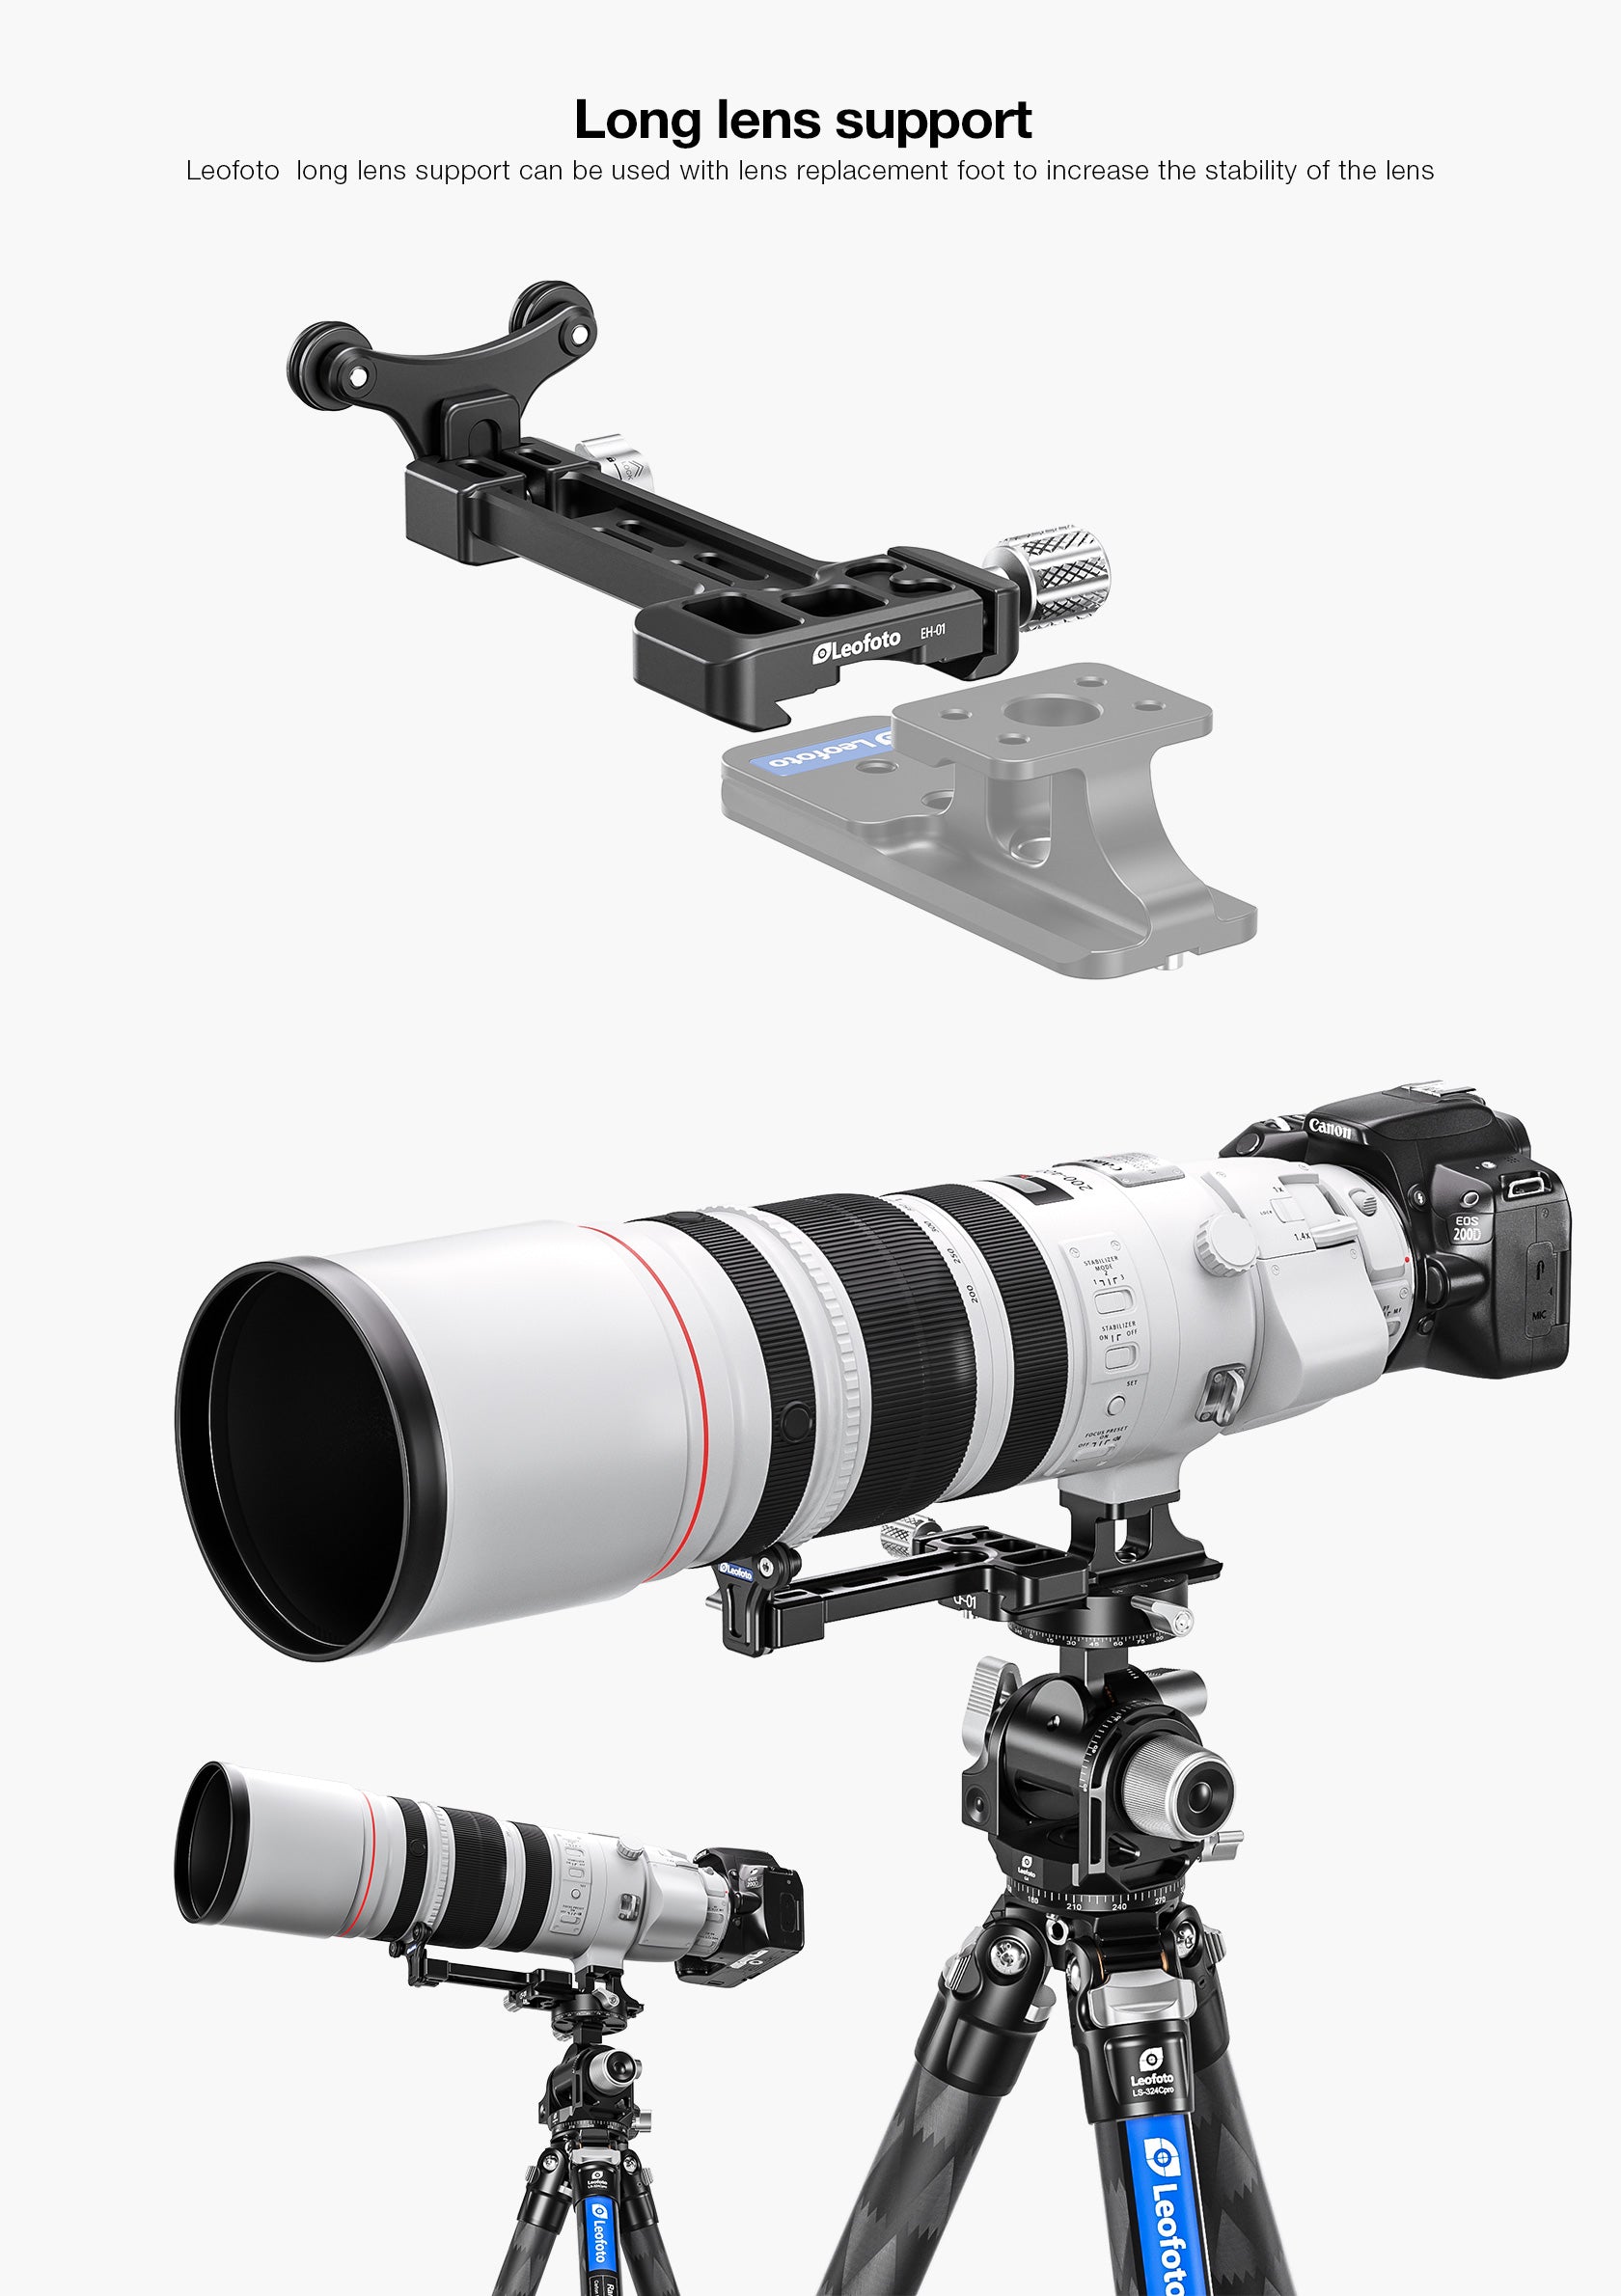 Leofoto EH-01 Long Lens Support for Camera Lens Feet | Arca Compatible